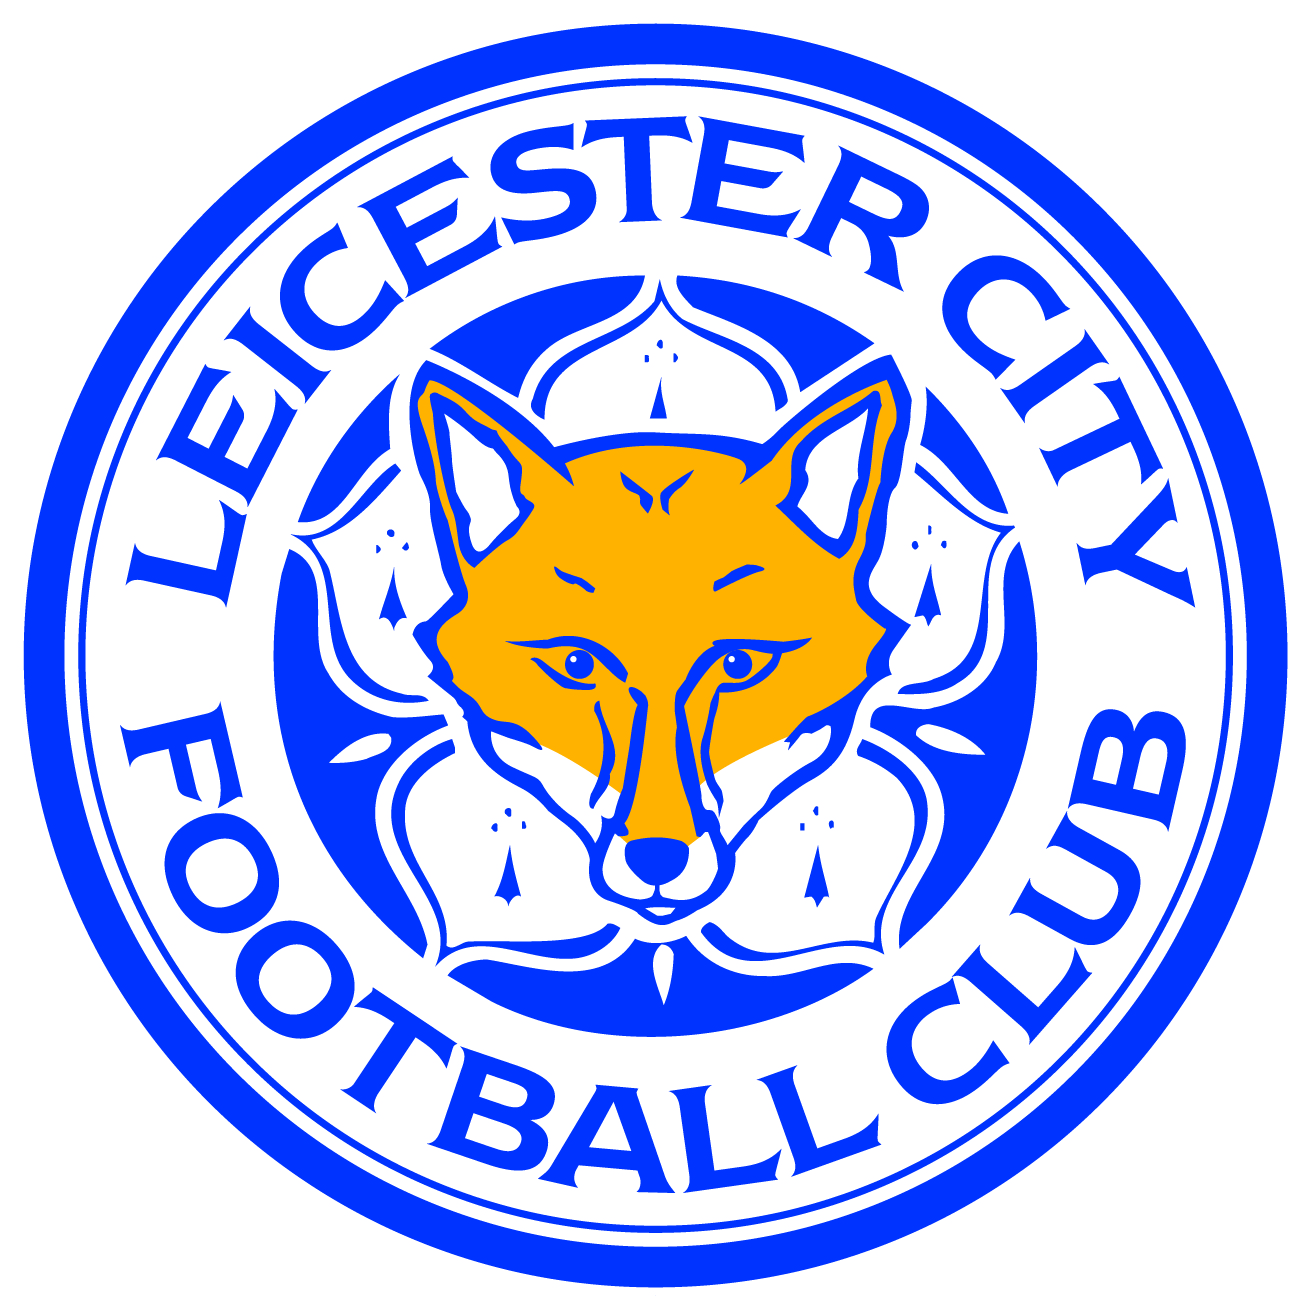 logo for Leicester City Football Club